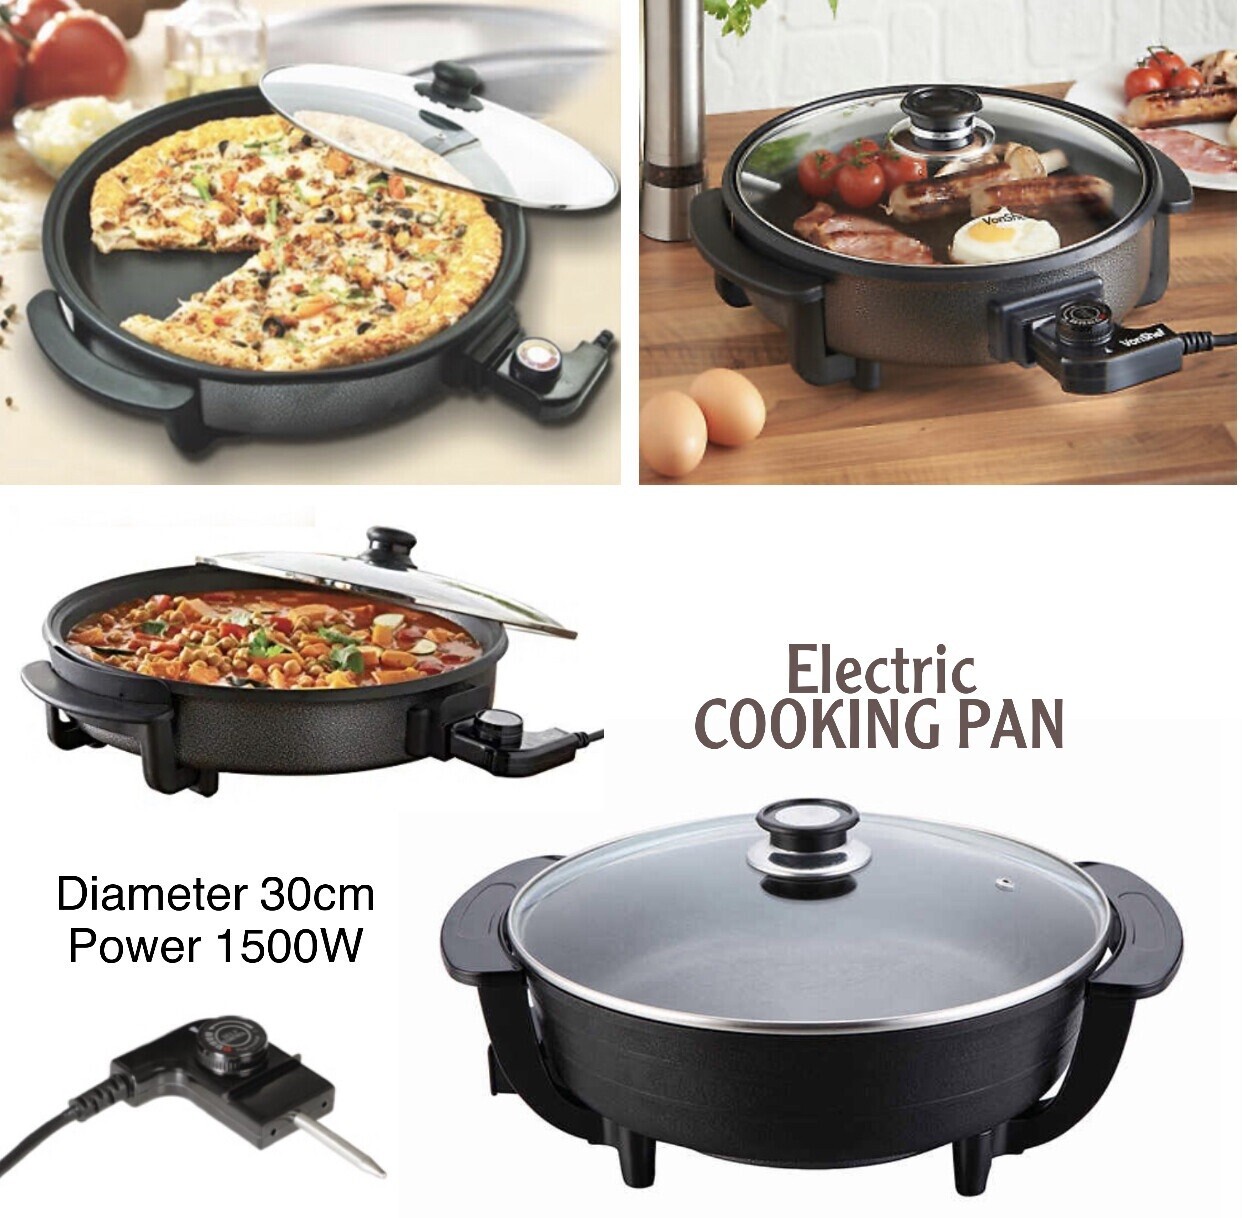 Electric Cooking Pan